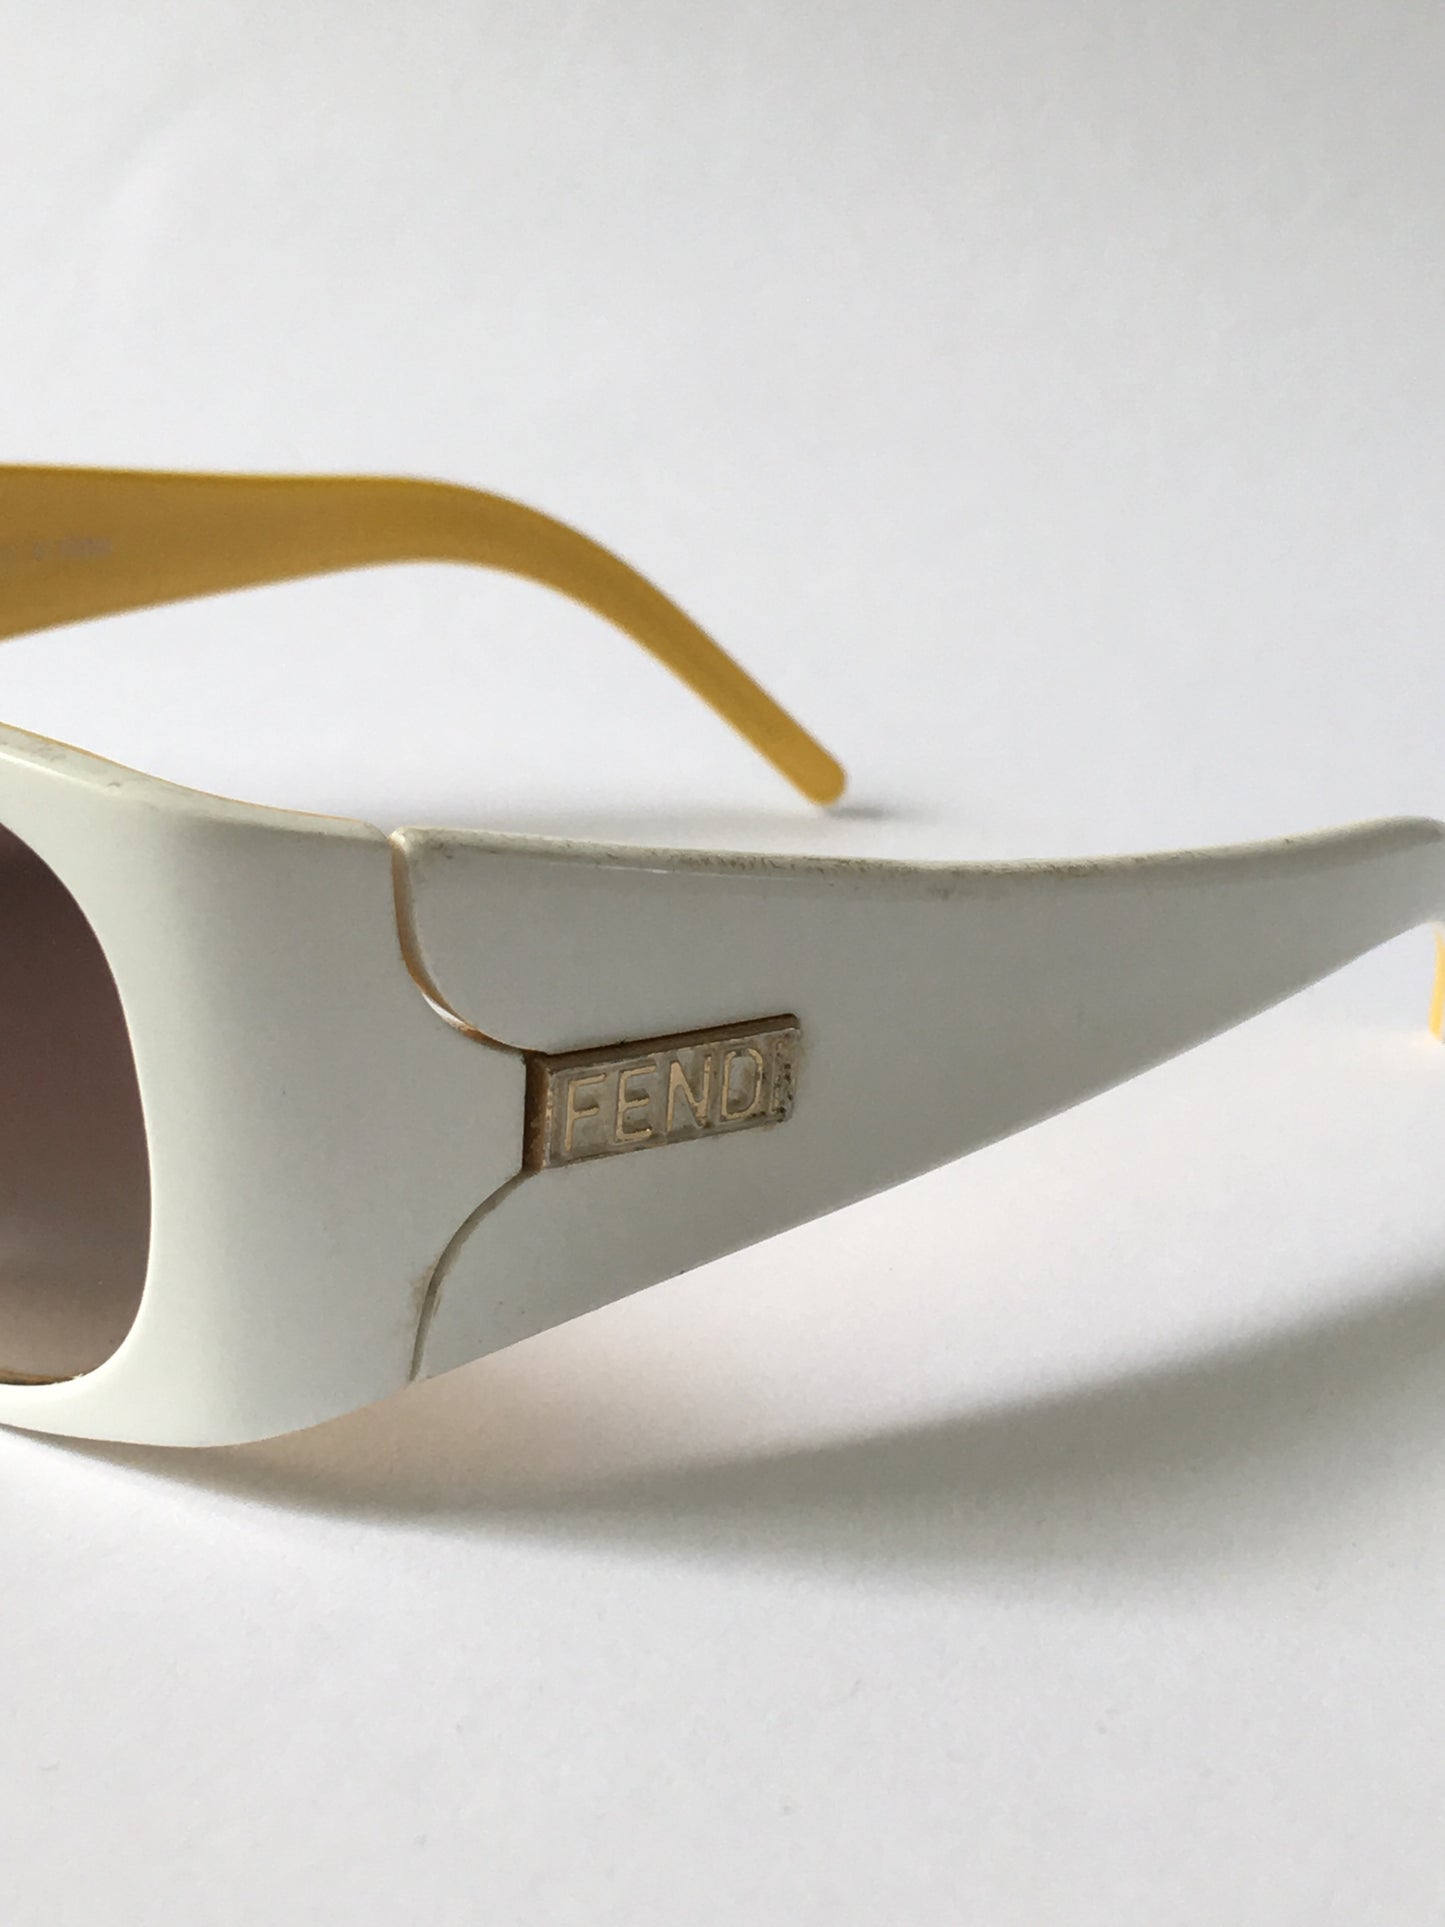 Fendi 90s sunglasses